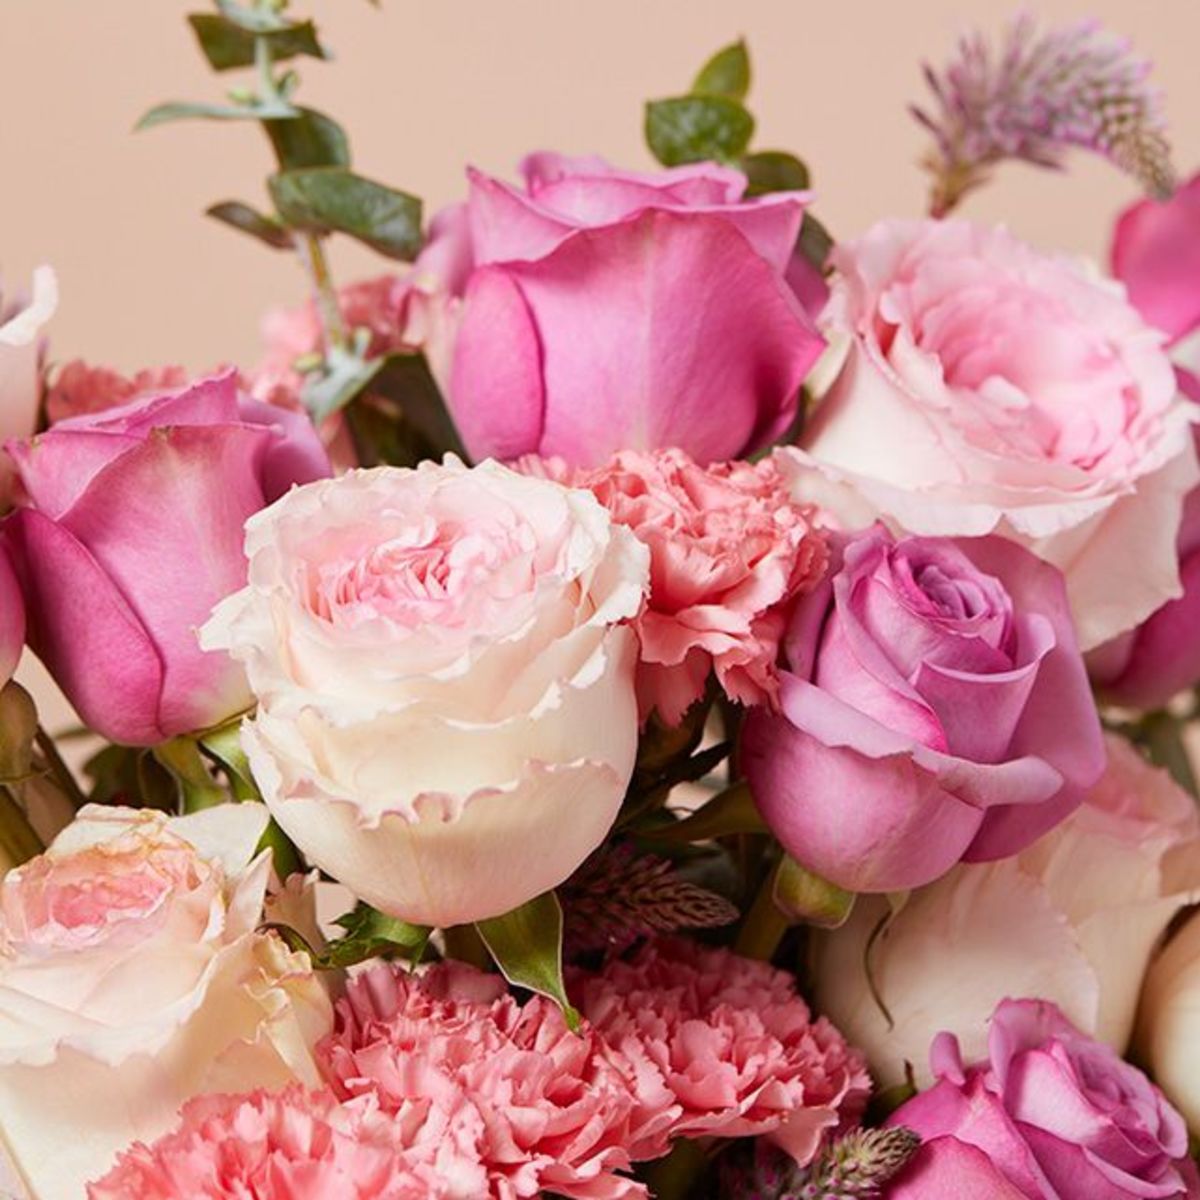 Send Flowers Online  Fresh Flower Bouquets - The Bouqs Co.